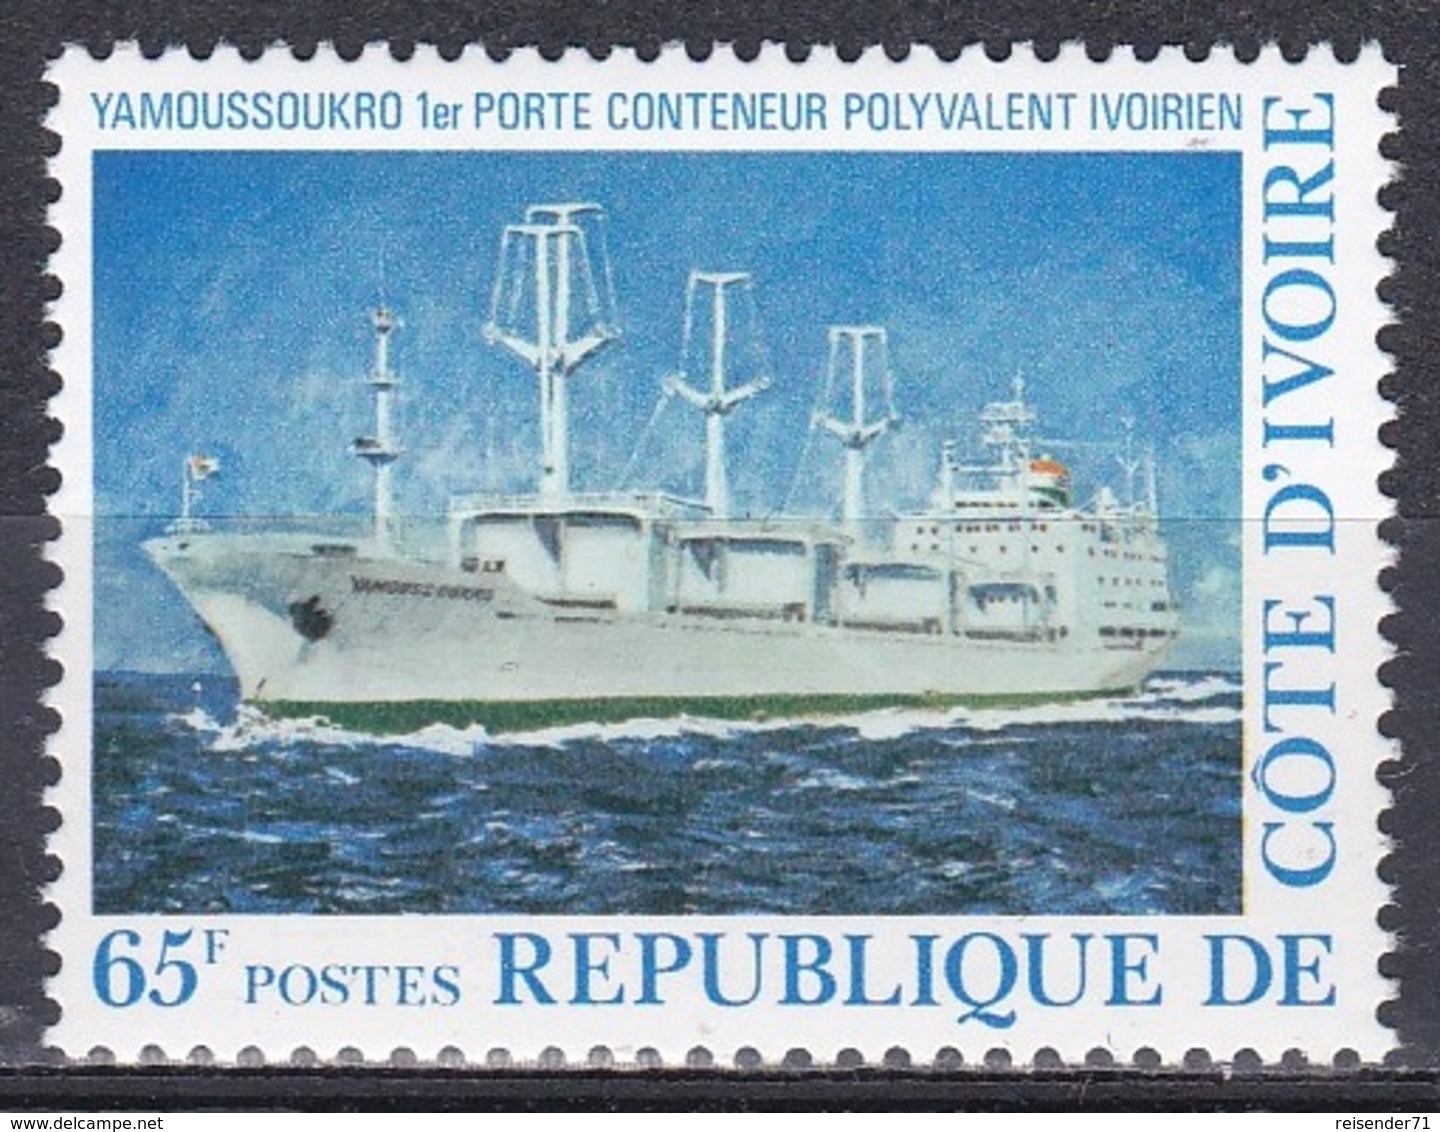 Elfenbeinküste Ivory Coast Cote D'Ivoire 1977 Transport Seefahrt Schiffe Ships Container Yamoussoukro, Mi. 531 ** - Ivory Coast (1960-...)